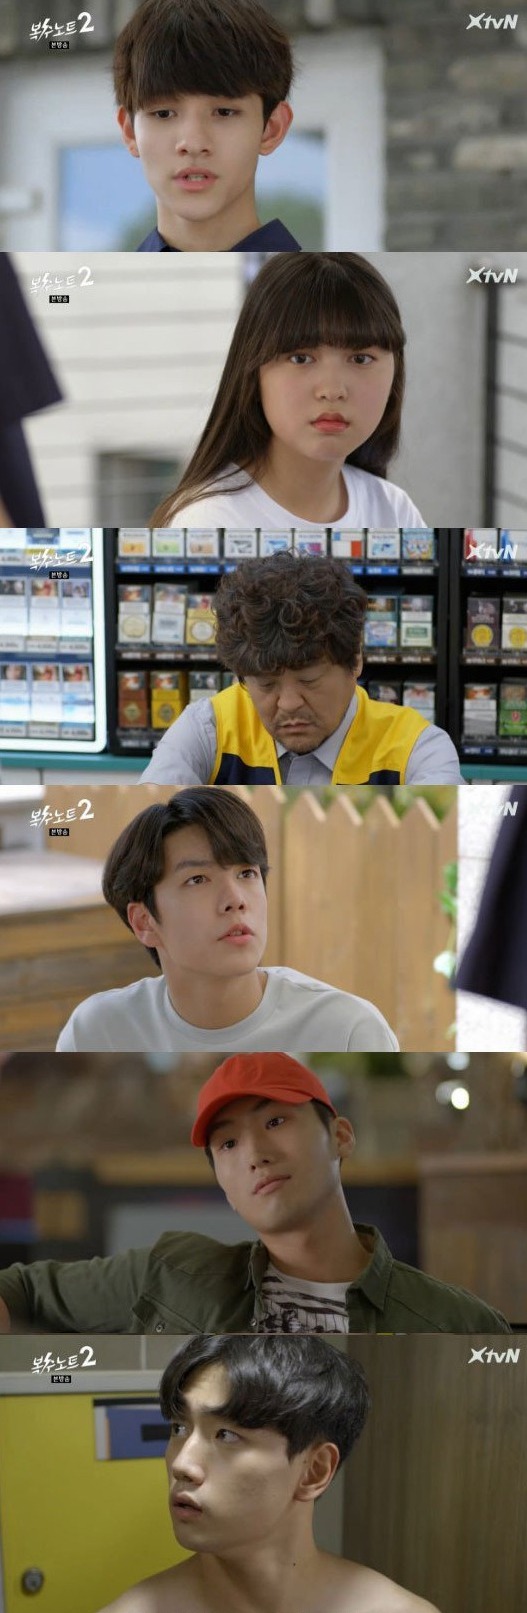 [korean Drama Spoiler] Revenge Note 2 Episode 7 Screenshots Added Hancinema